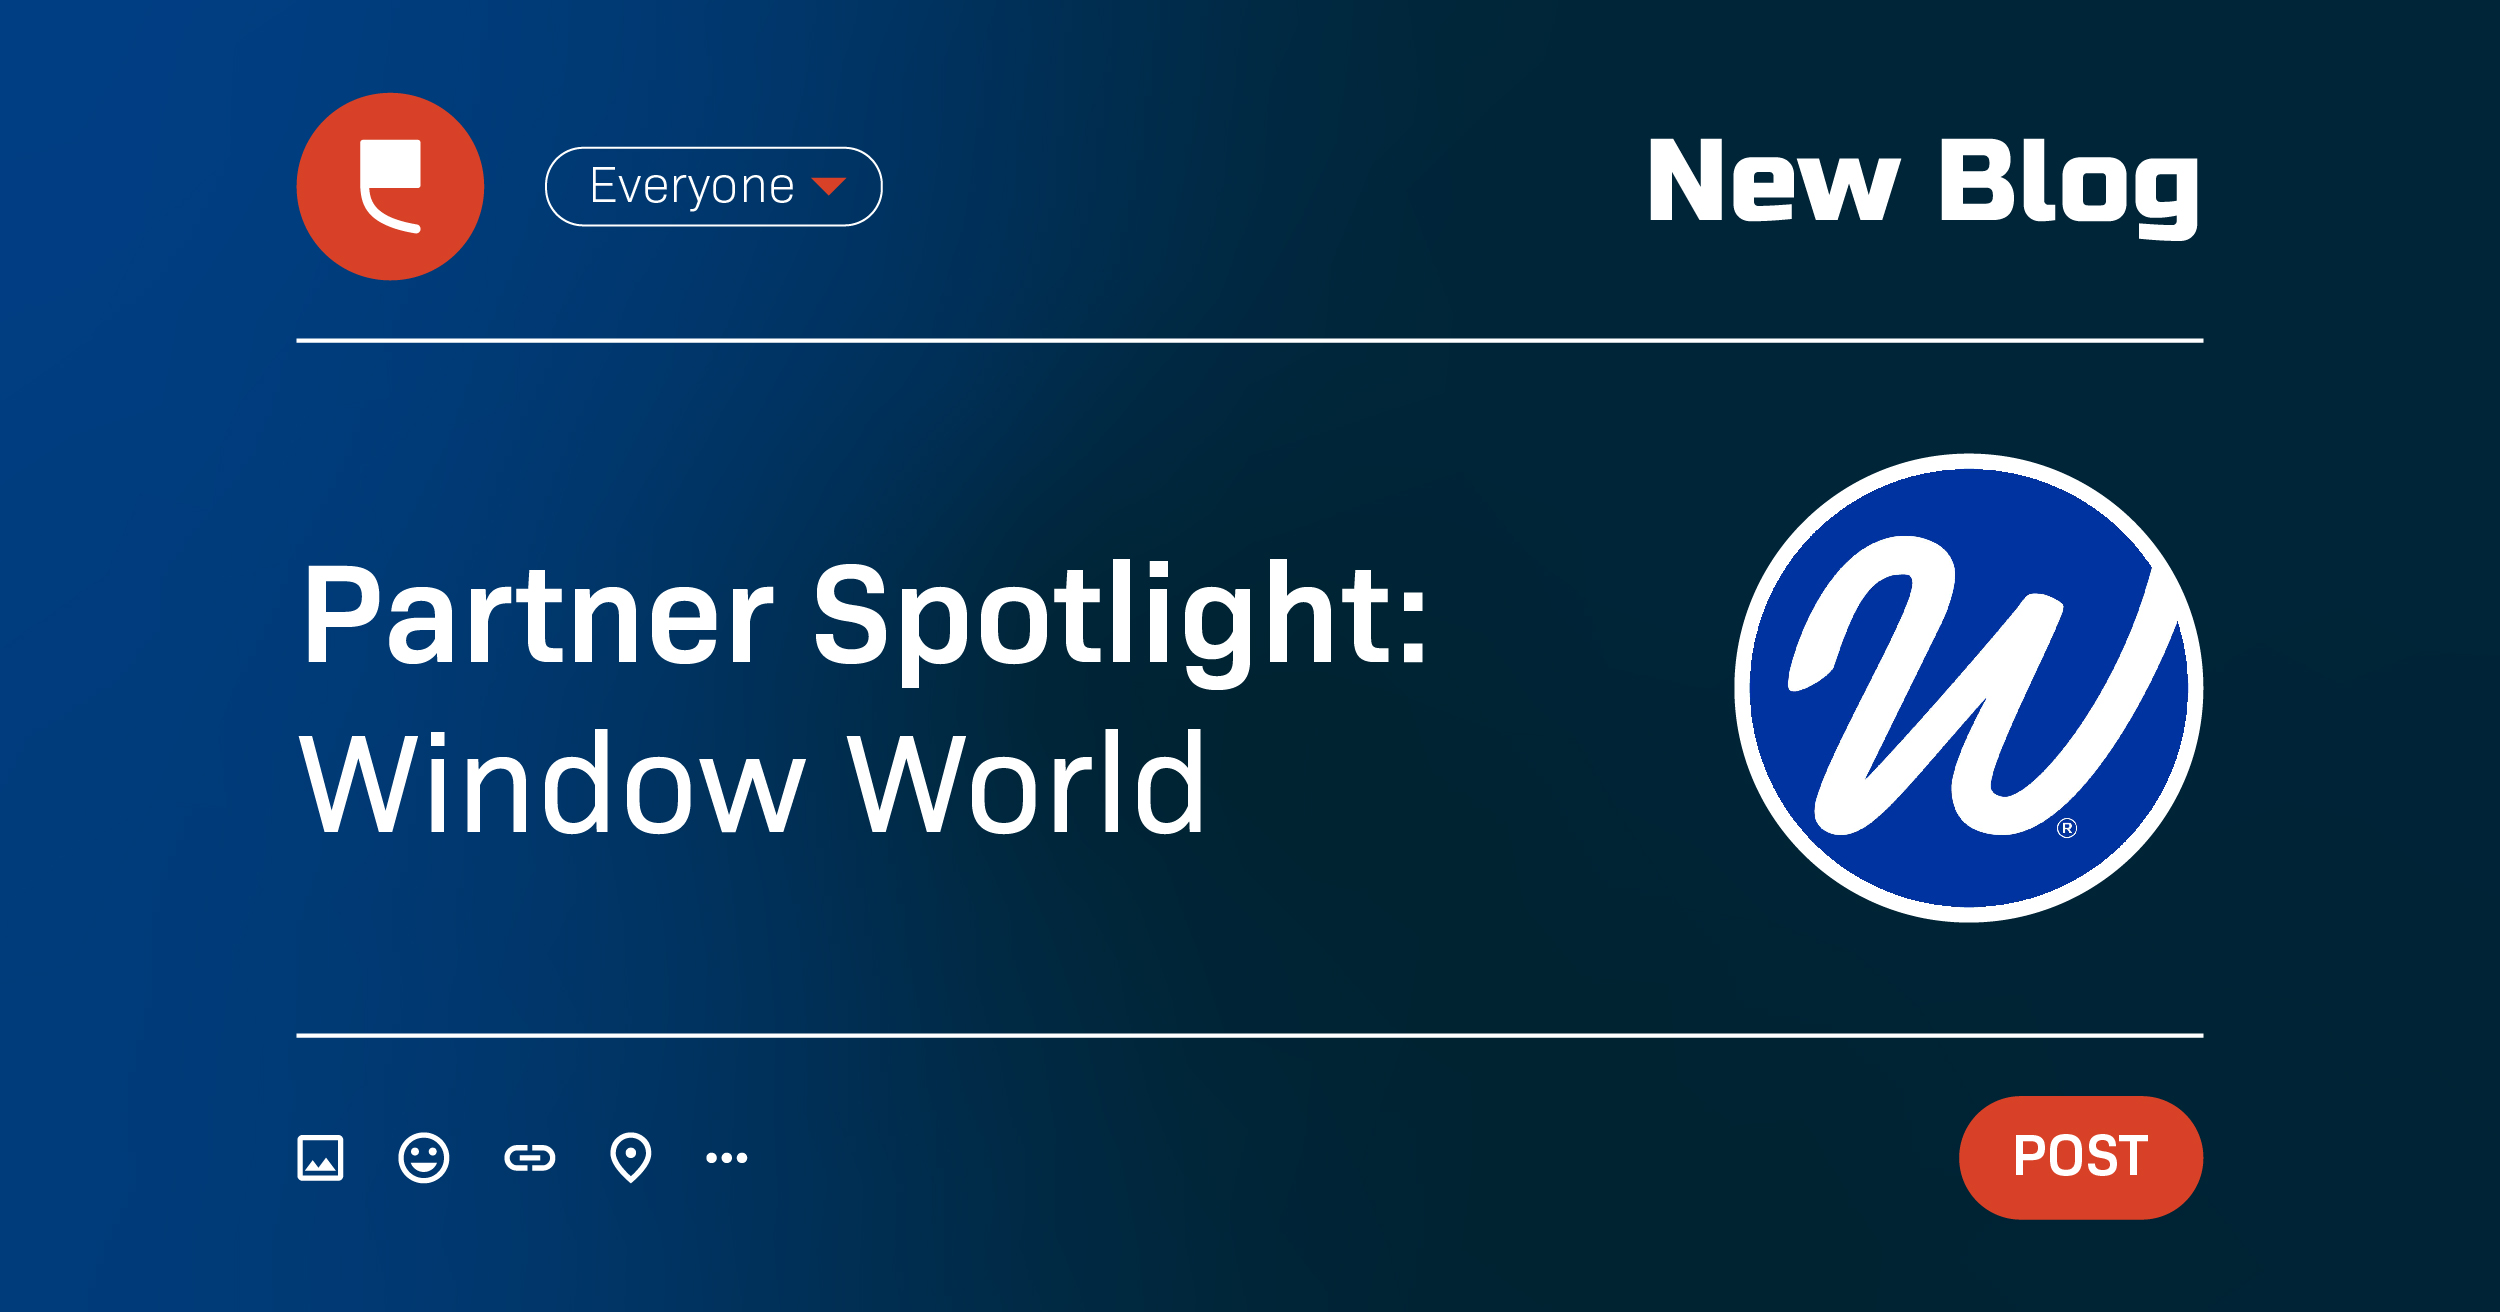 Partner Spotlight: Window World - Featured Image